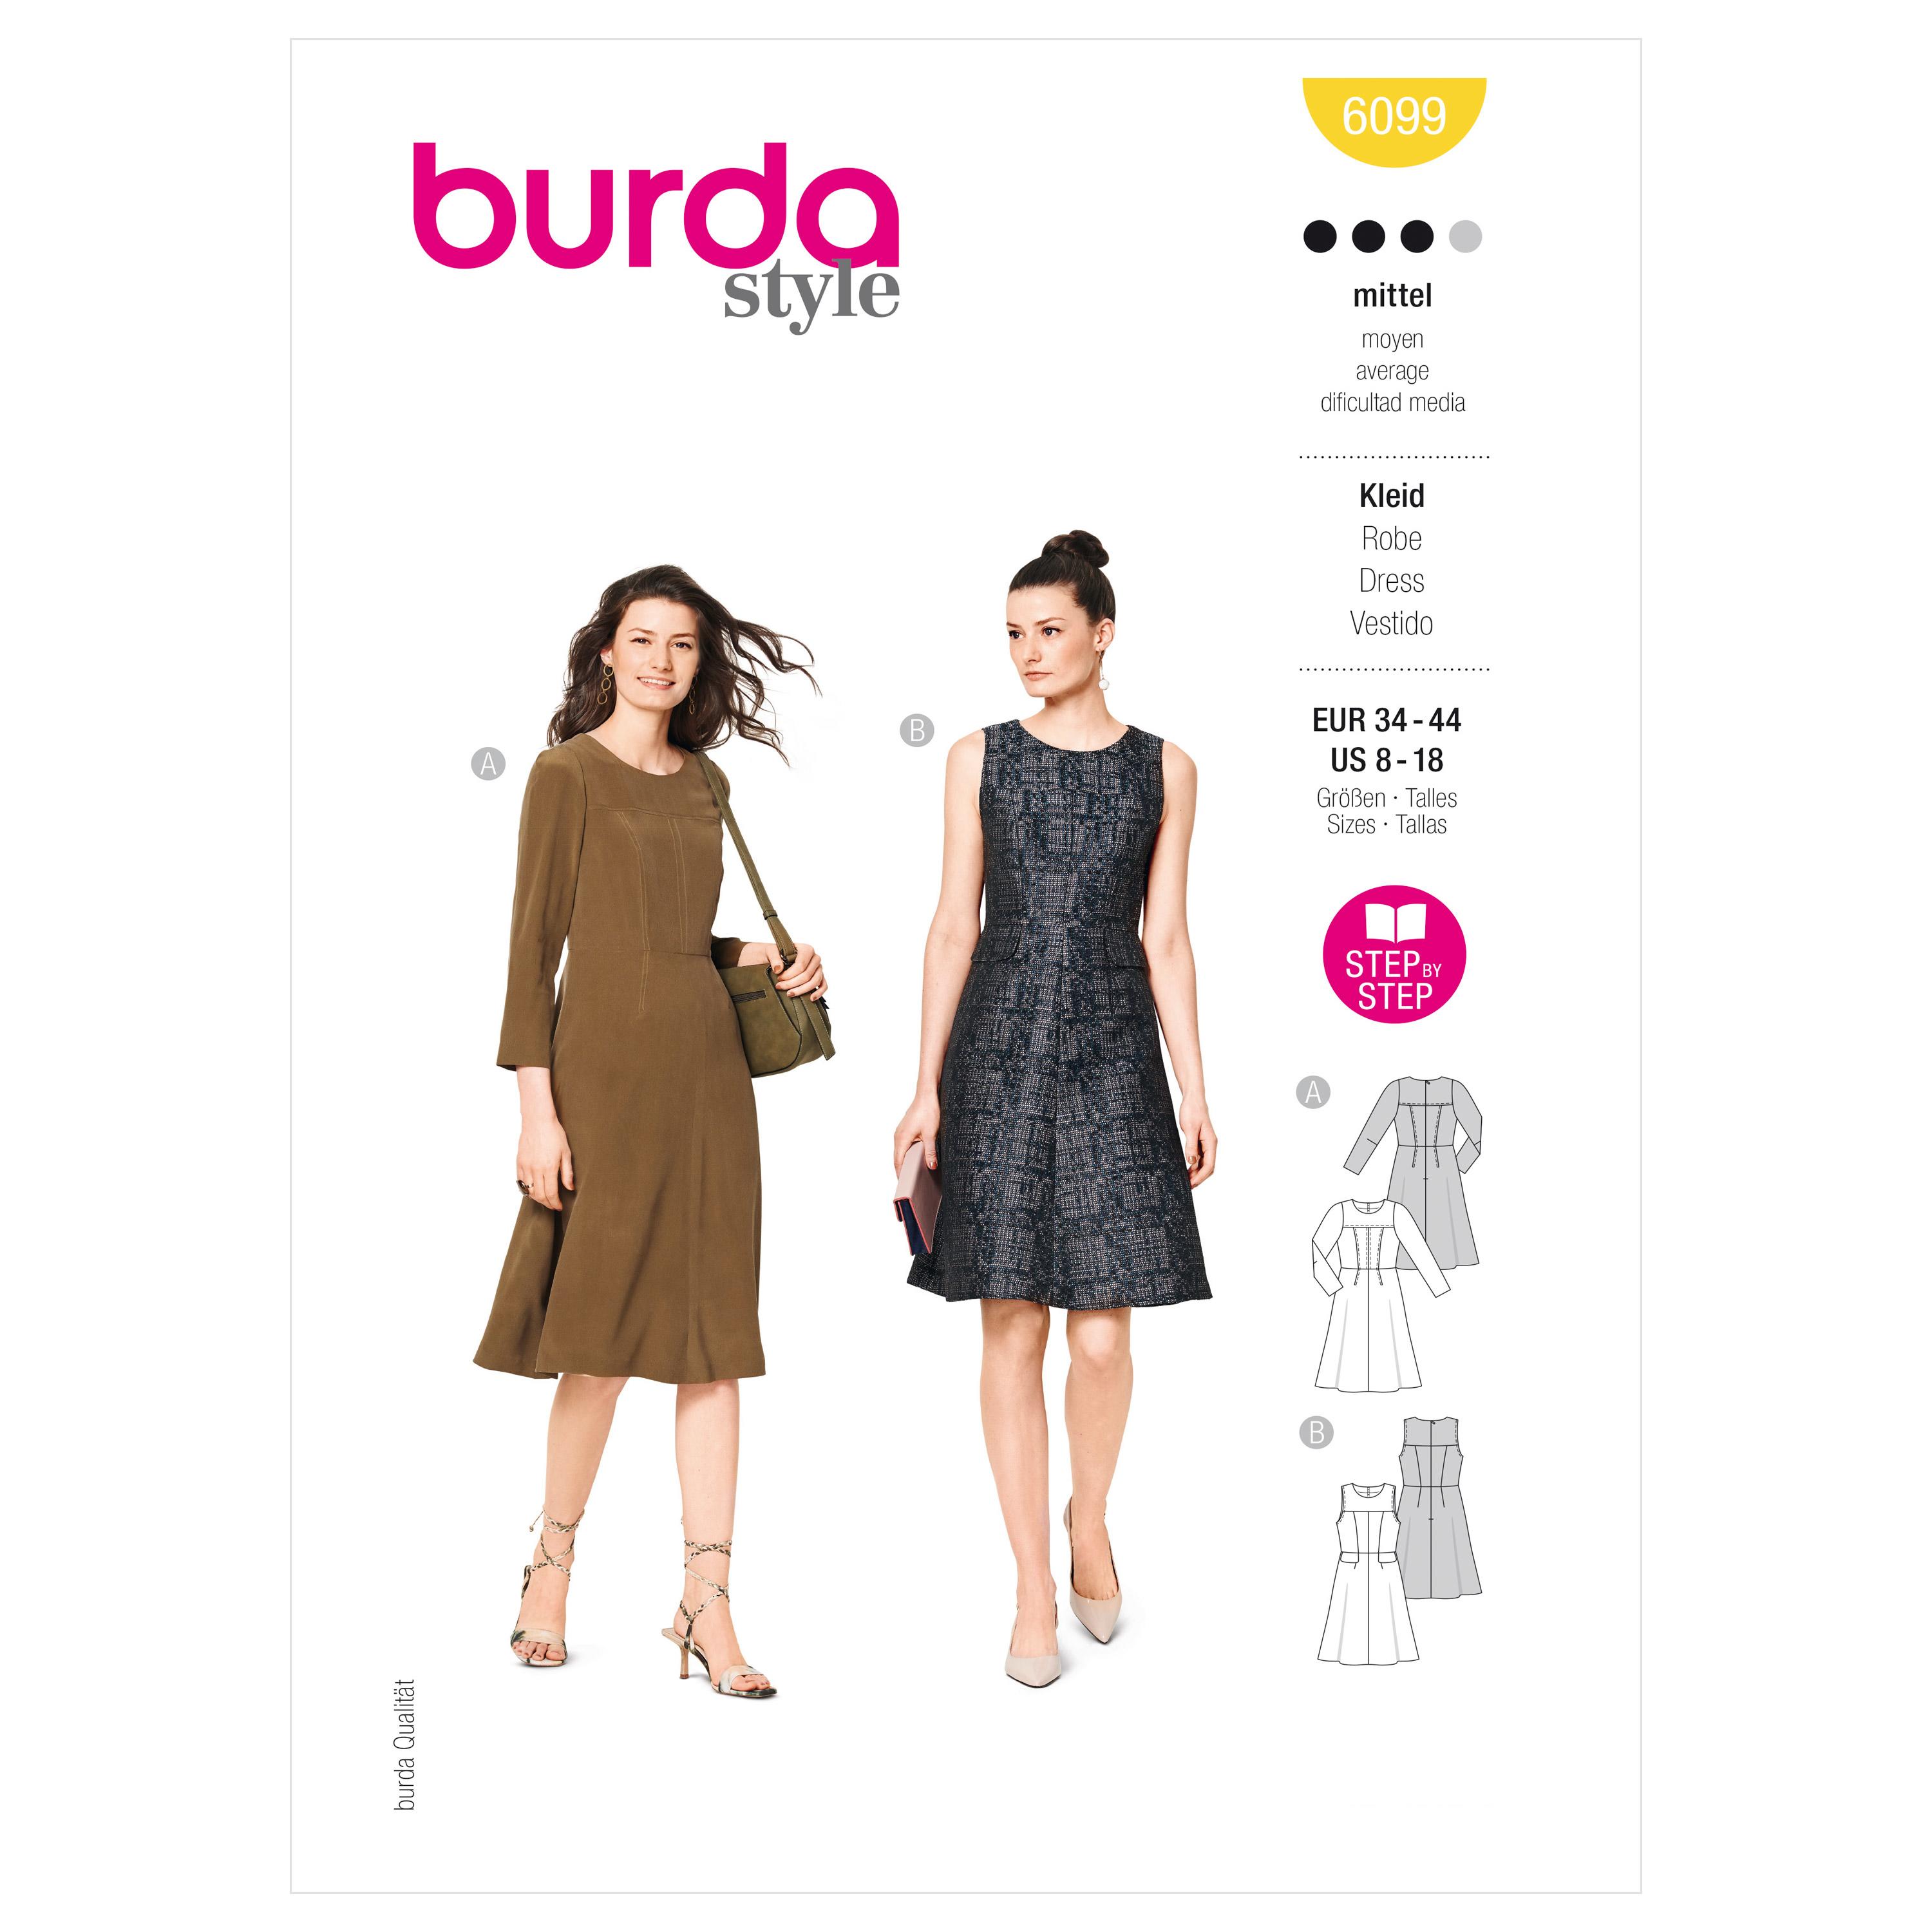 Burda Style Pattern 6099 Misses' Dress